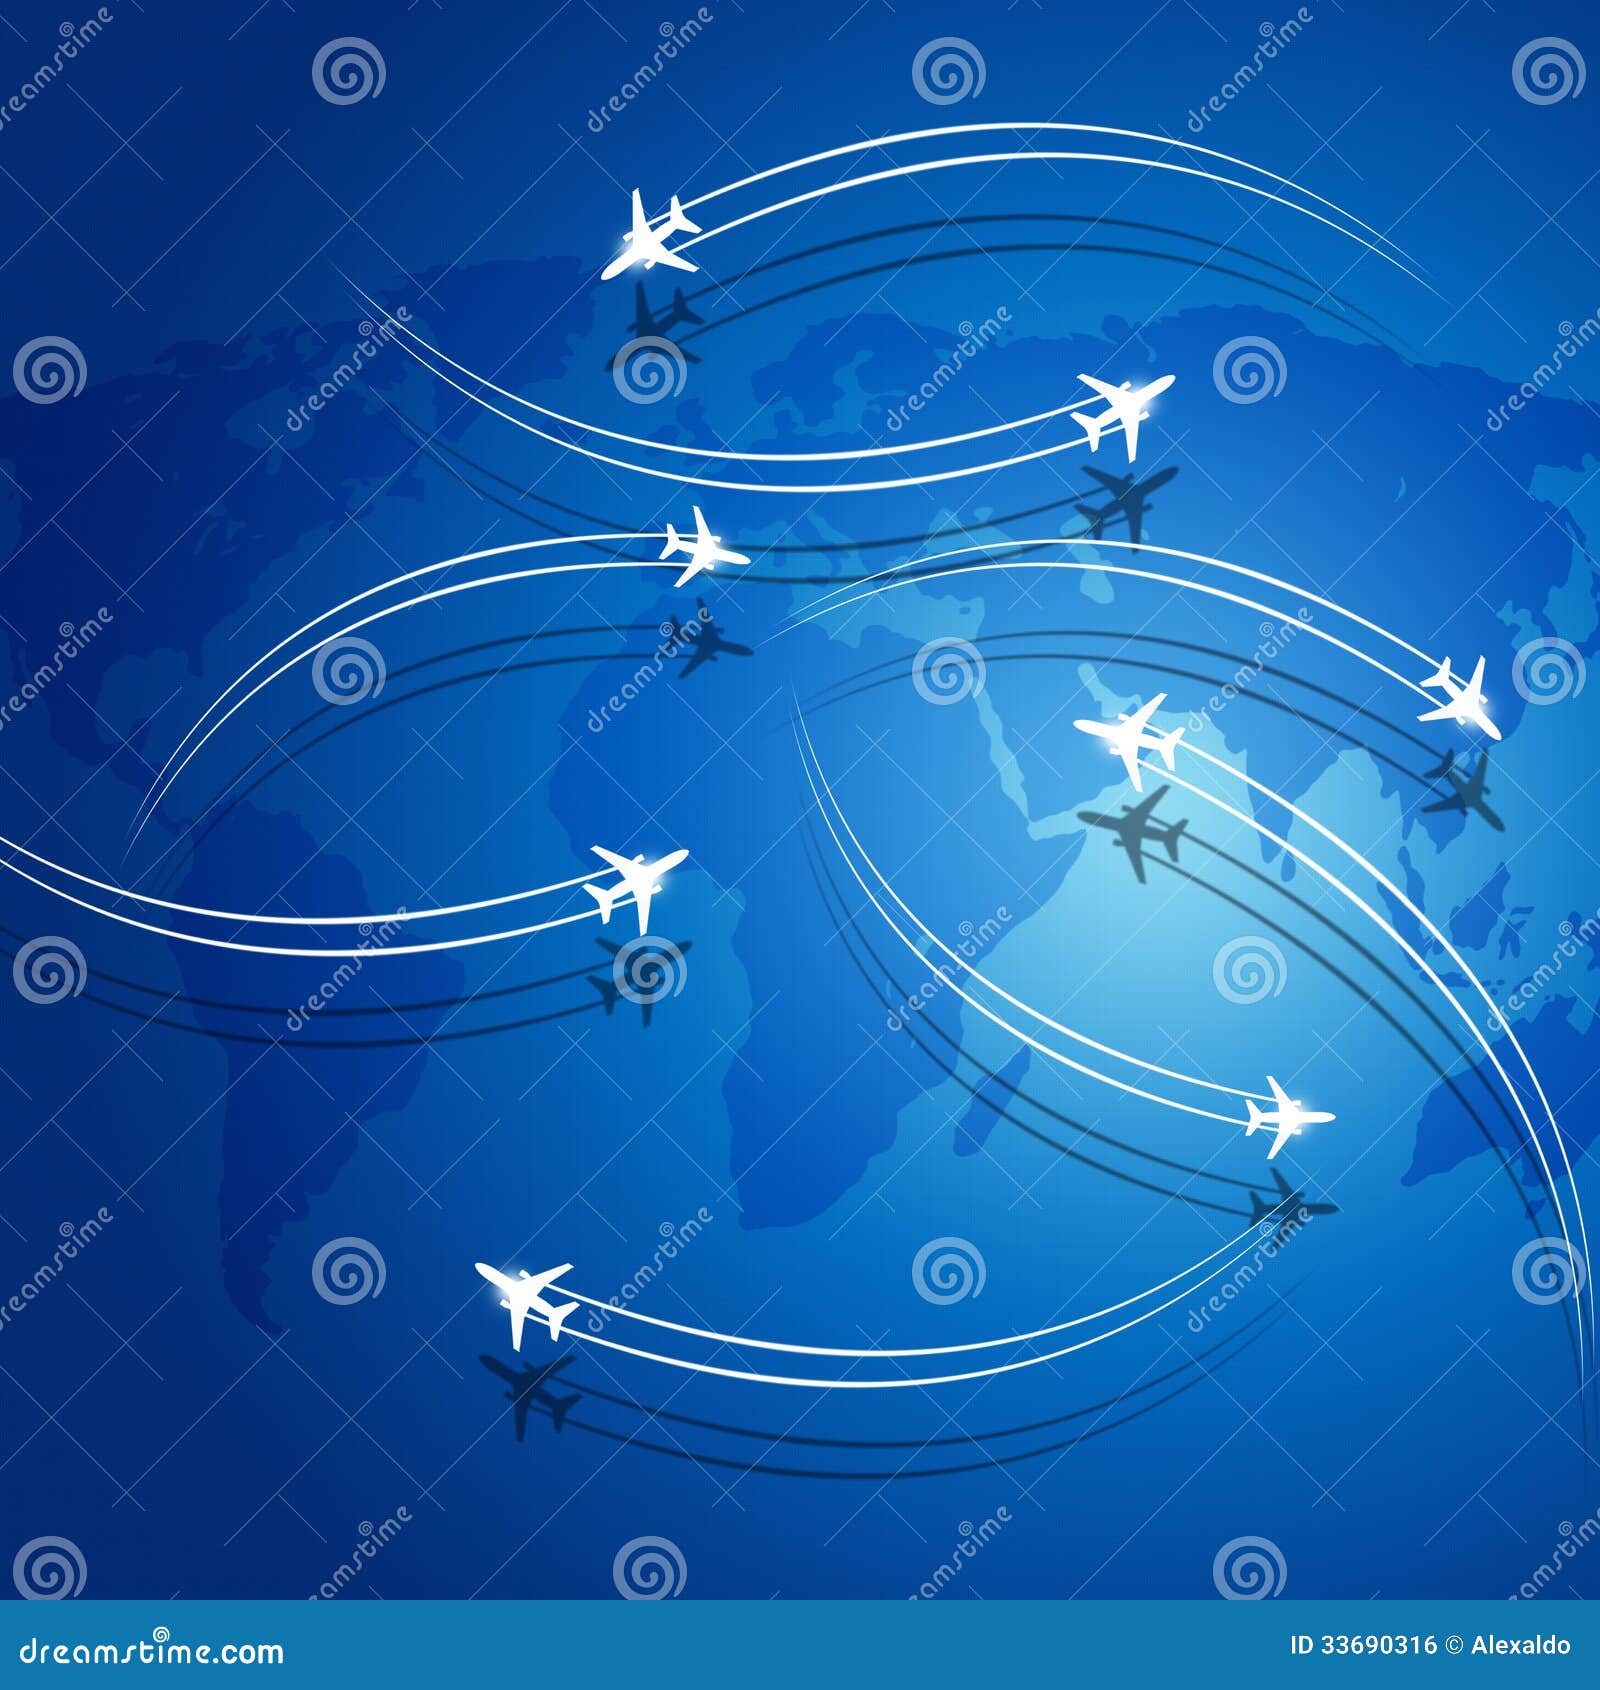 aviation background